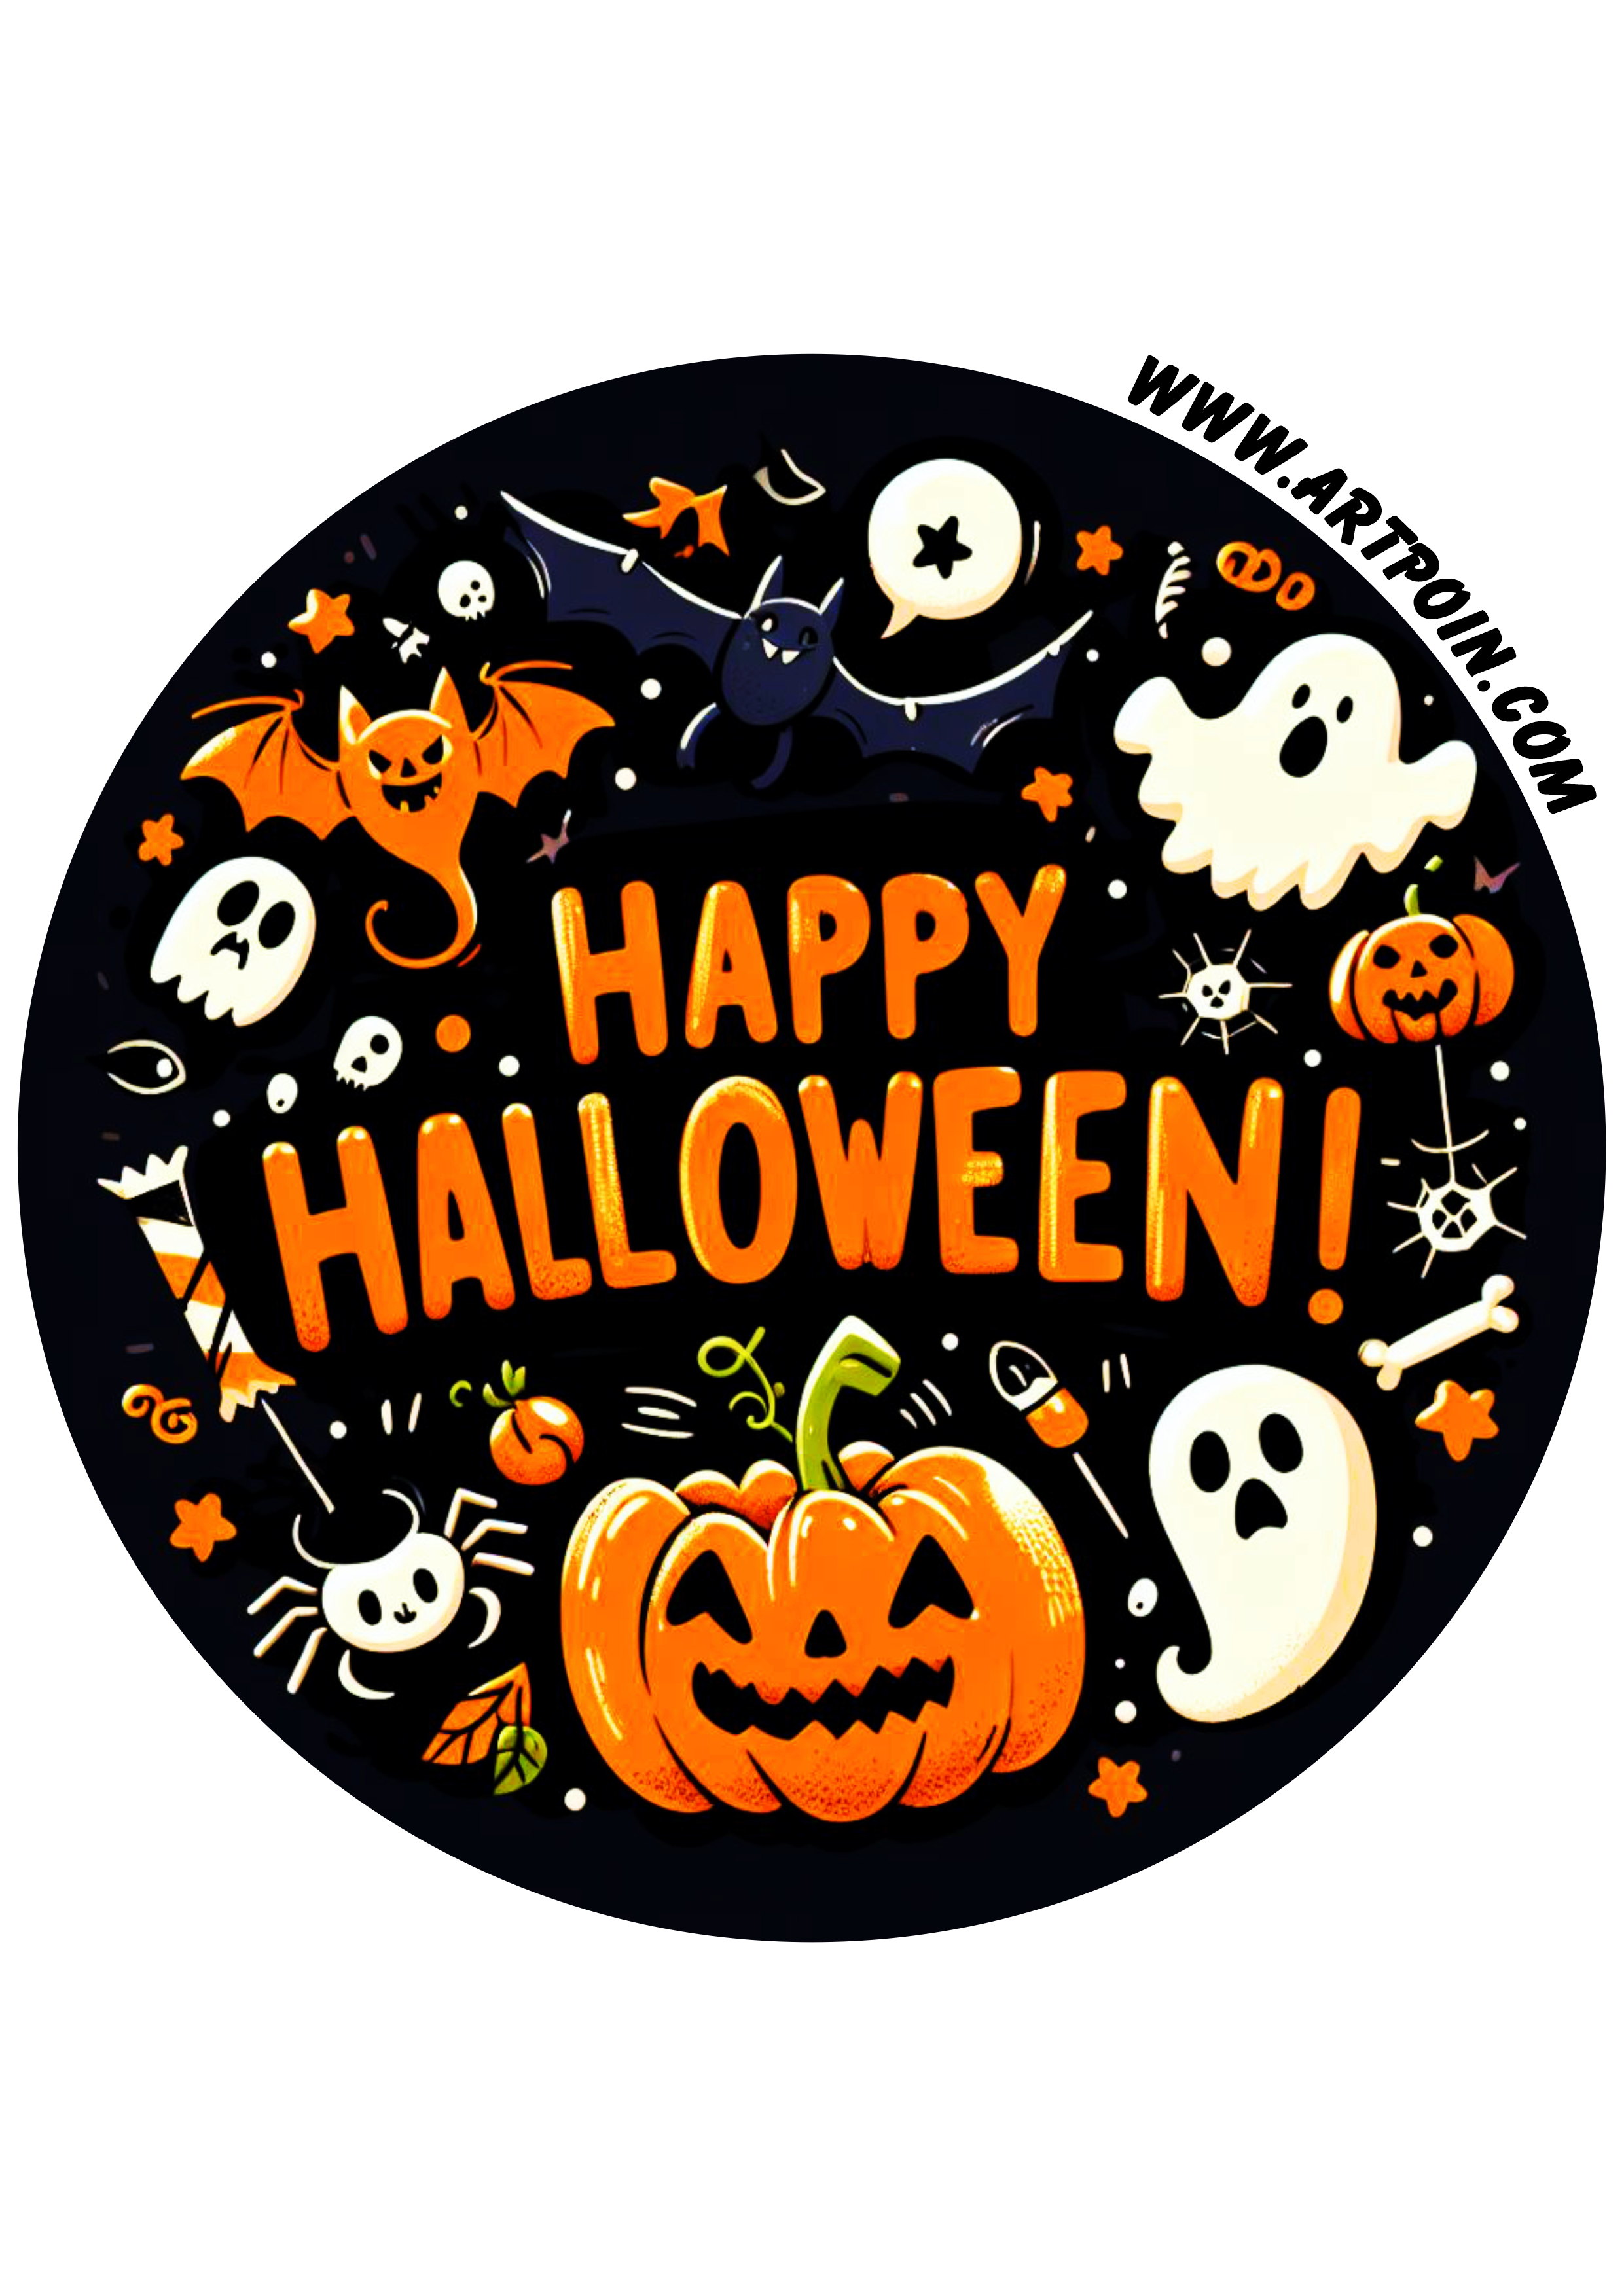 Happy Halloween adesivo redondo tag sticker painel assustador fantasma abóbora aranha gostosuras ou travessuras png